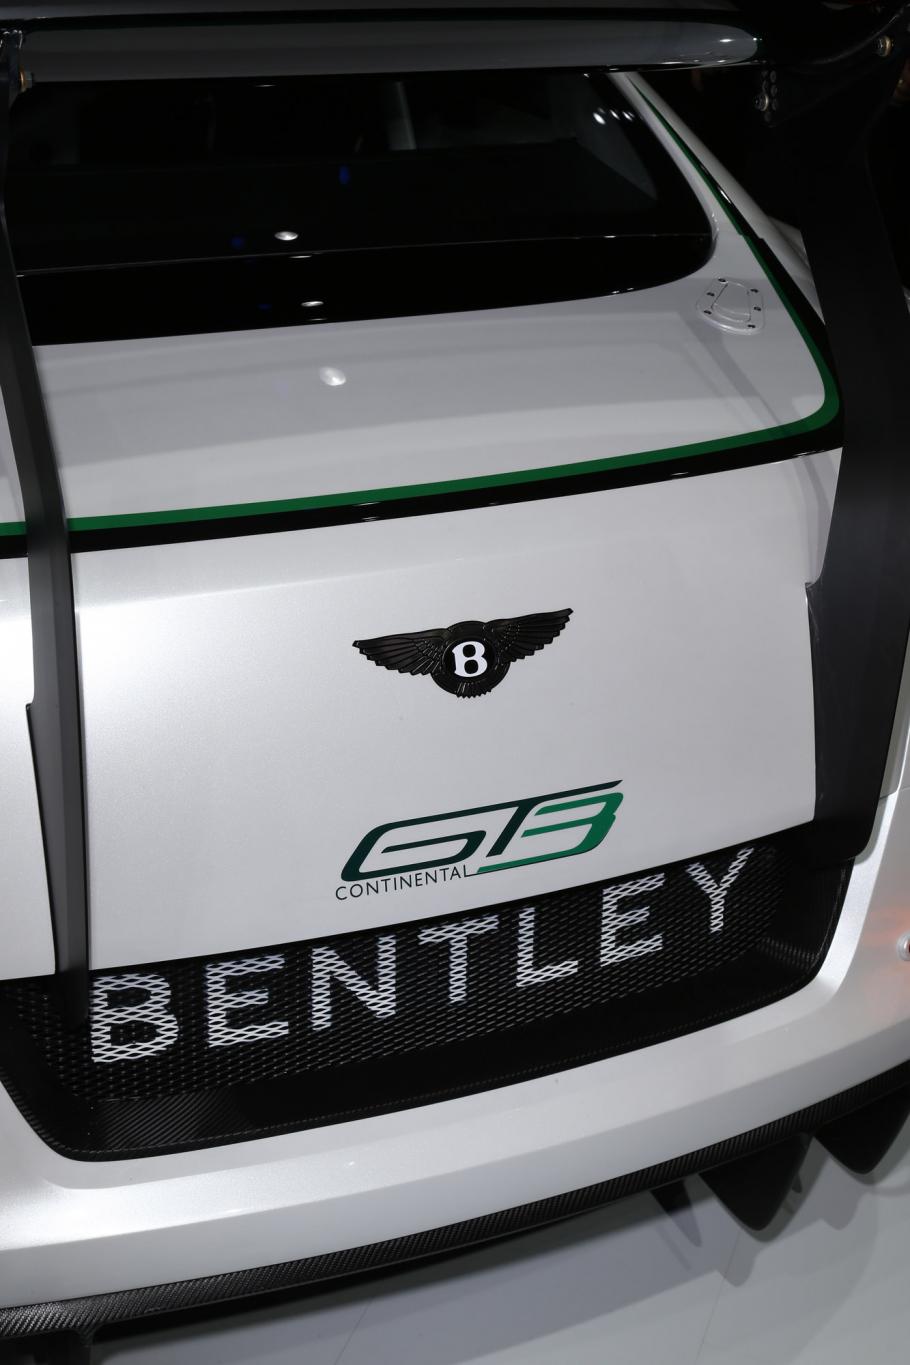 Bentley Continental GT3 Paris